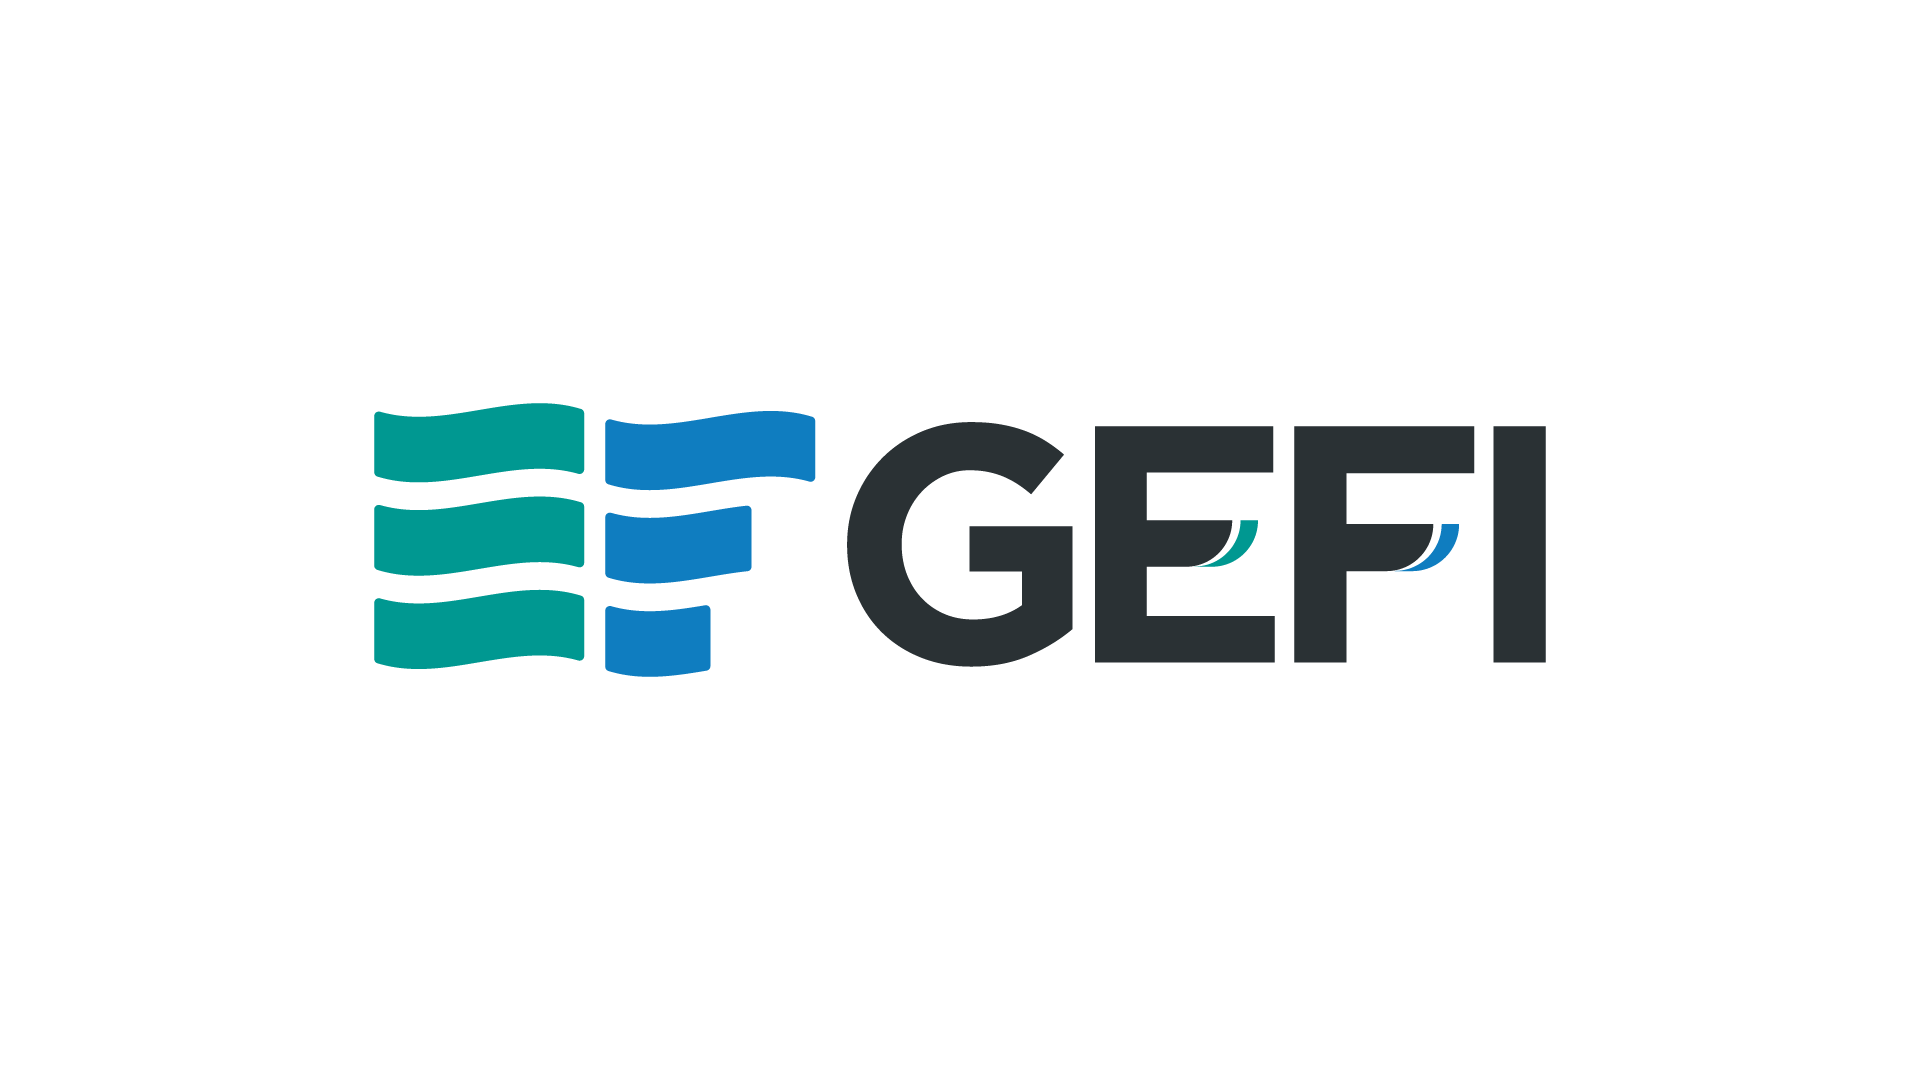 GEFI243 Abridged Logo Approved 01